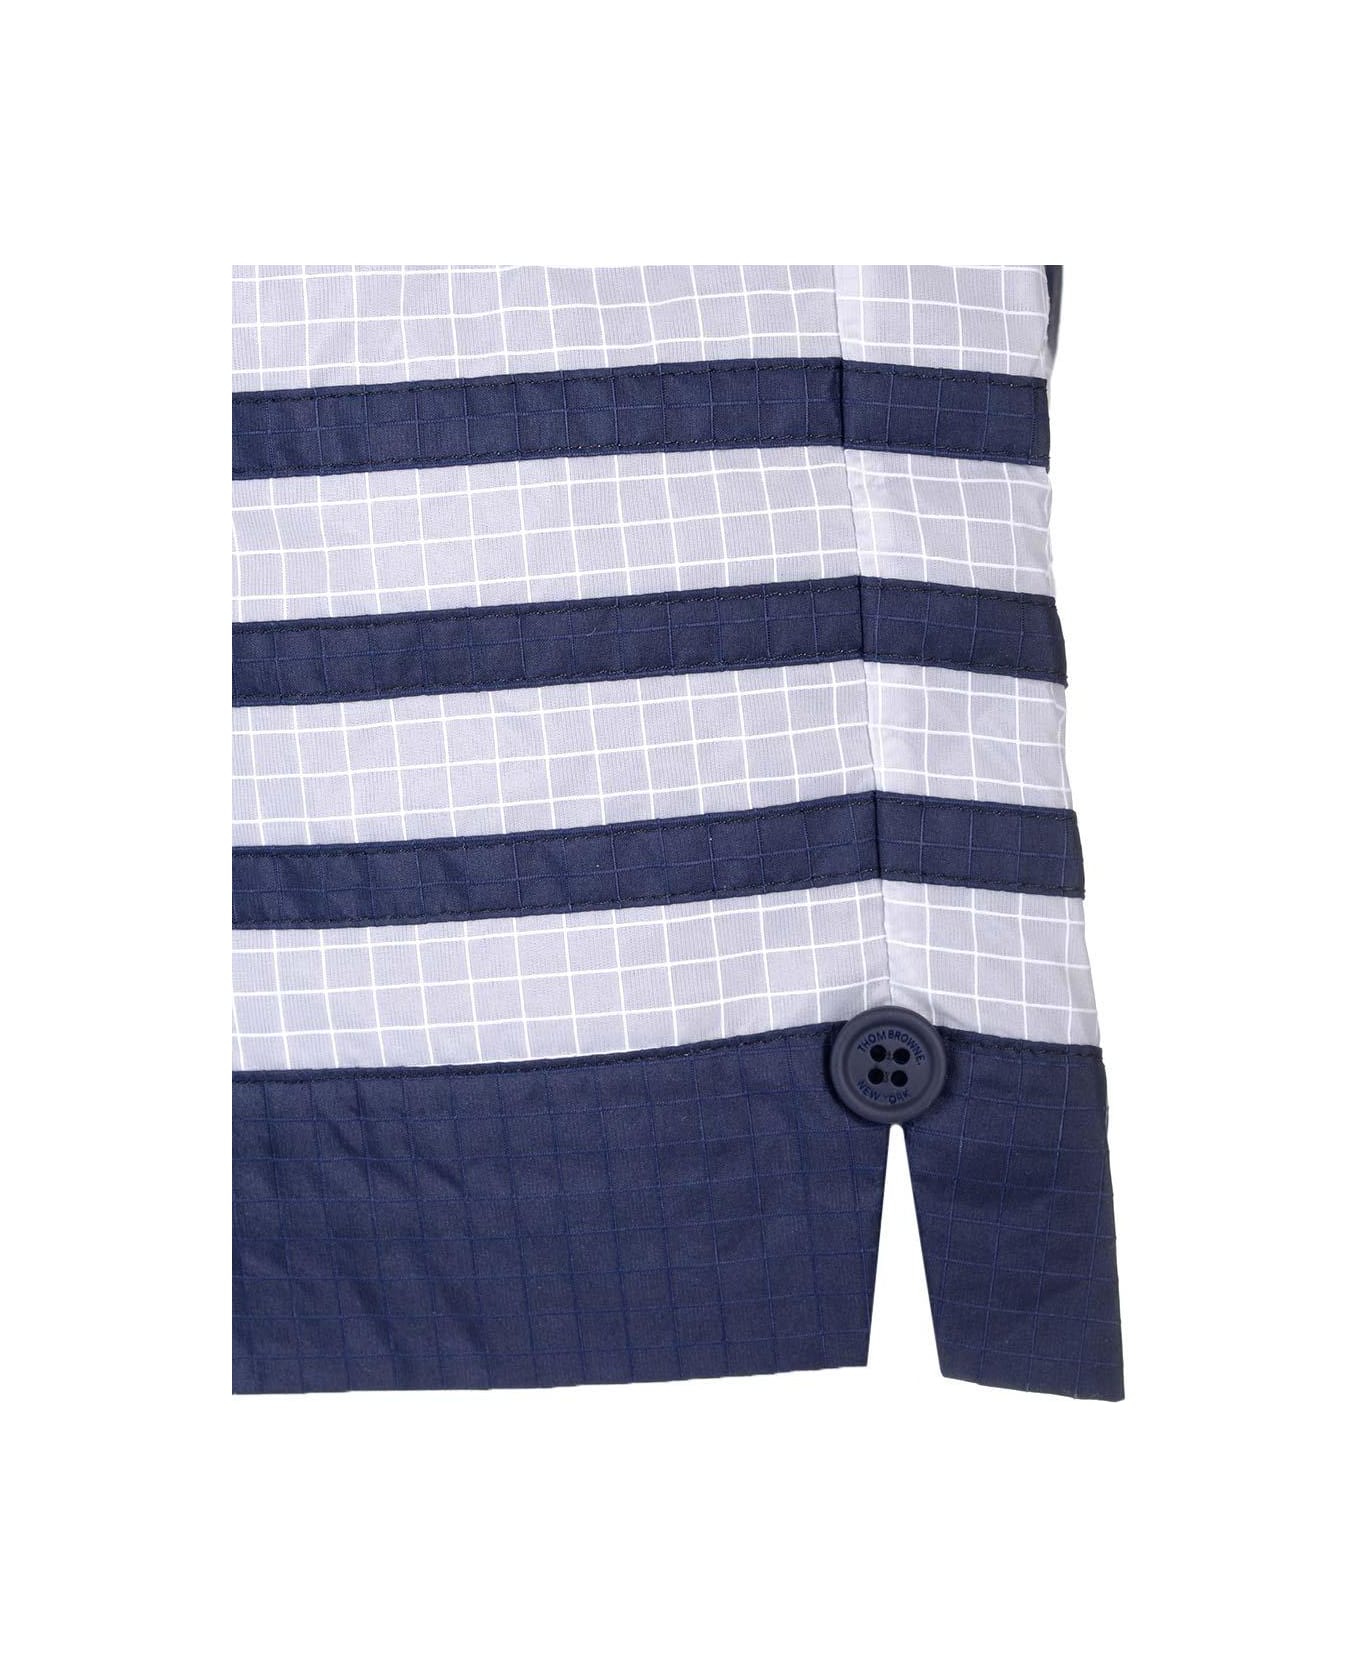 Thom Browne 4-bar Stripe Detailed Shorts - NAVY